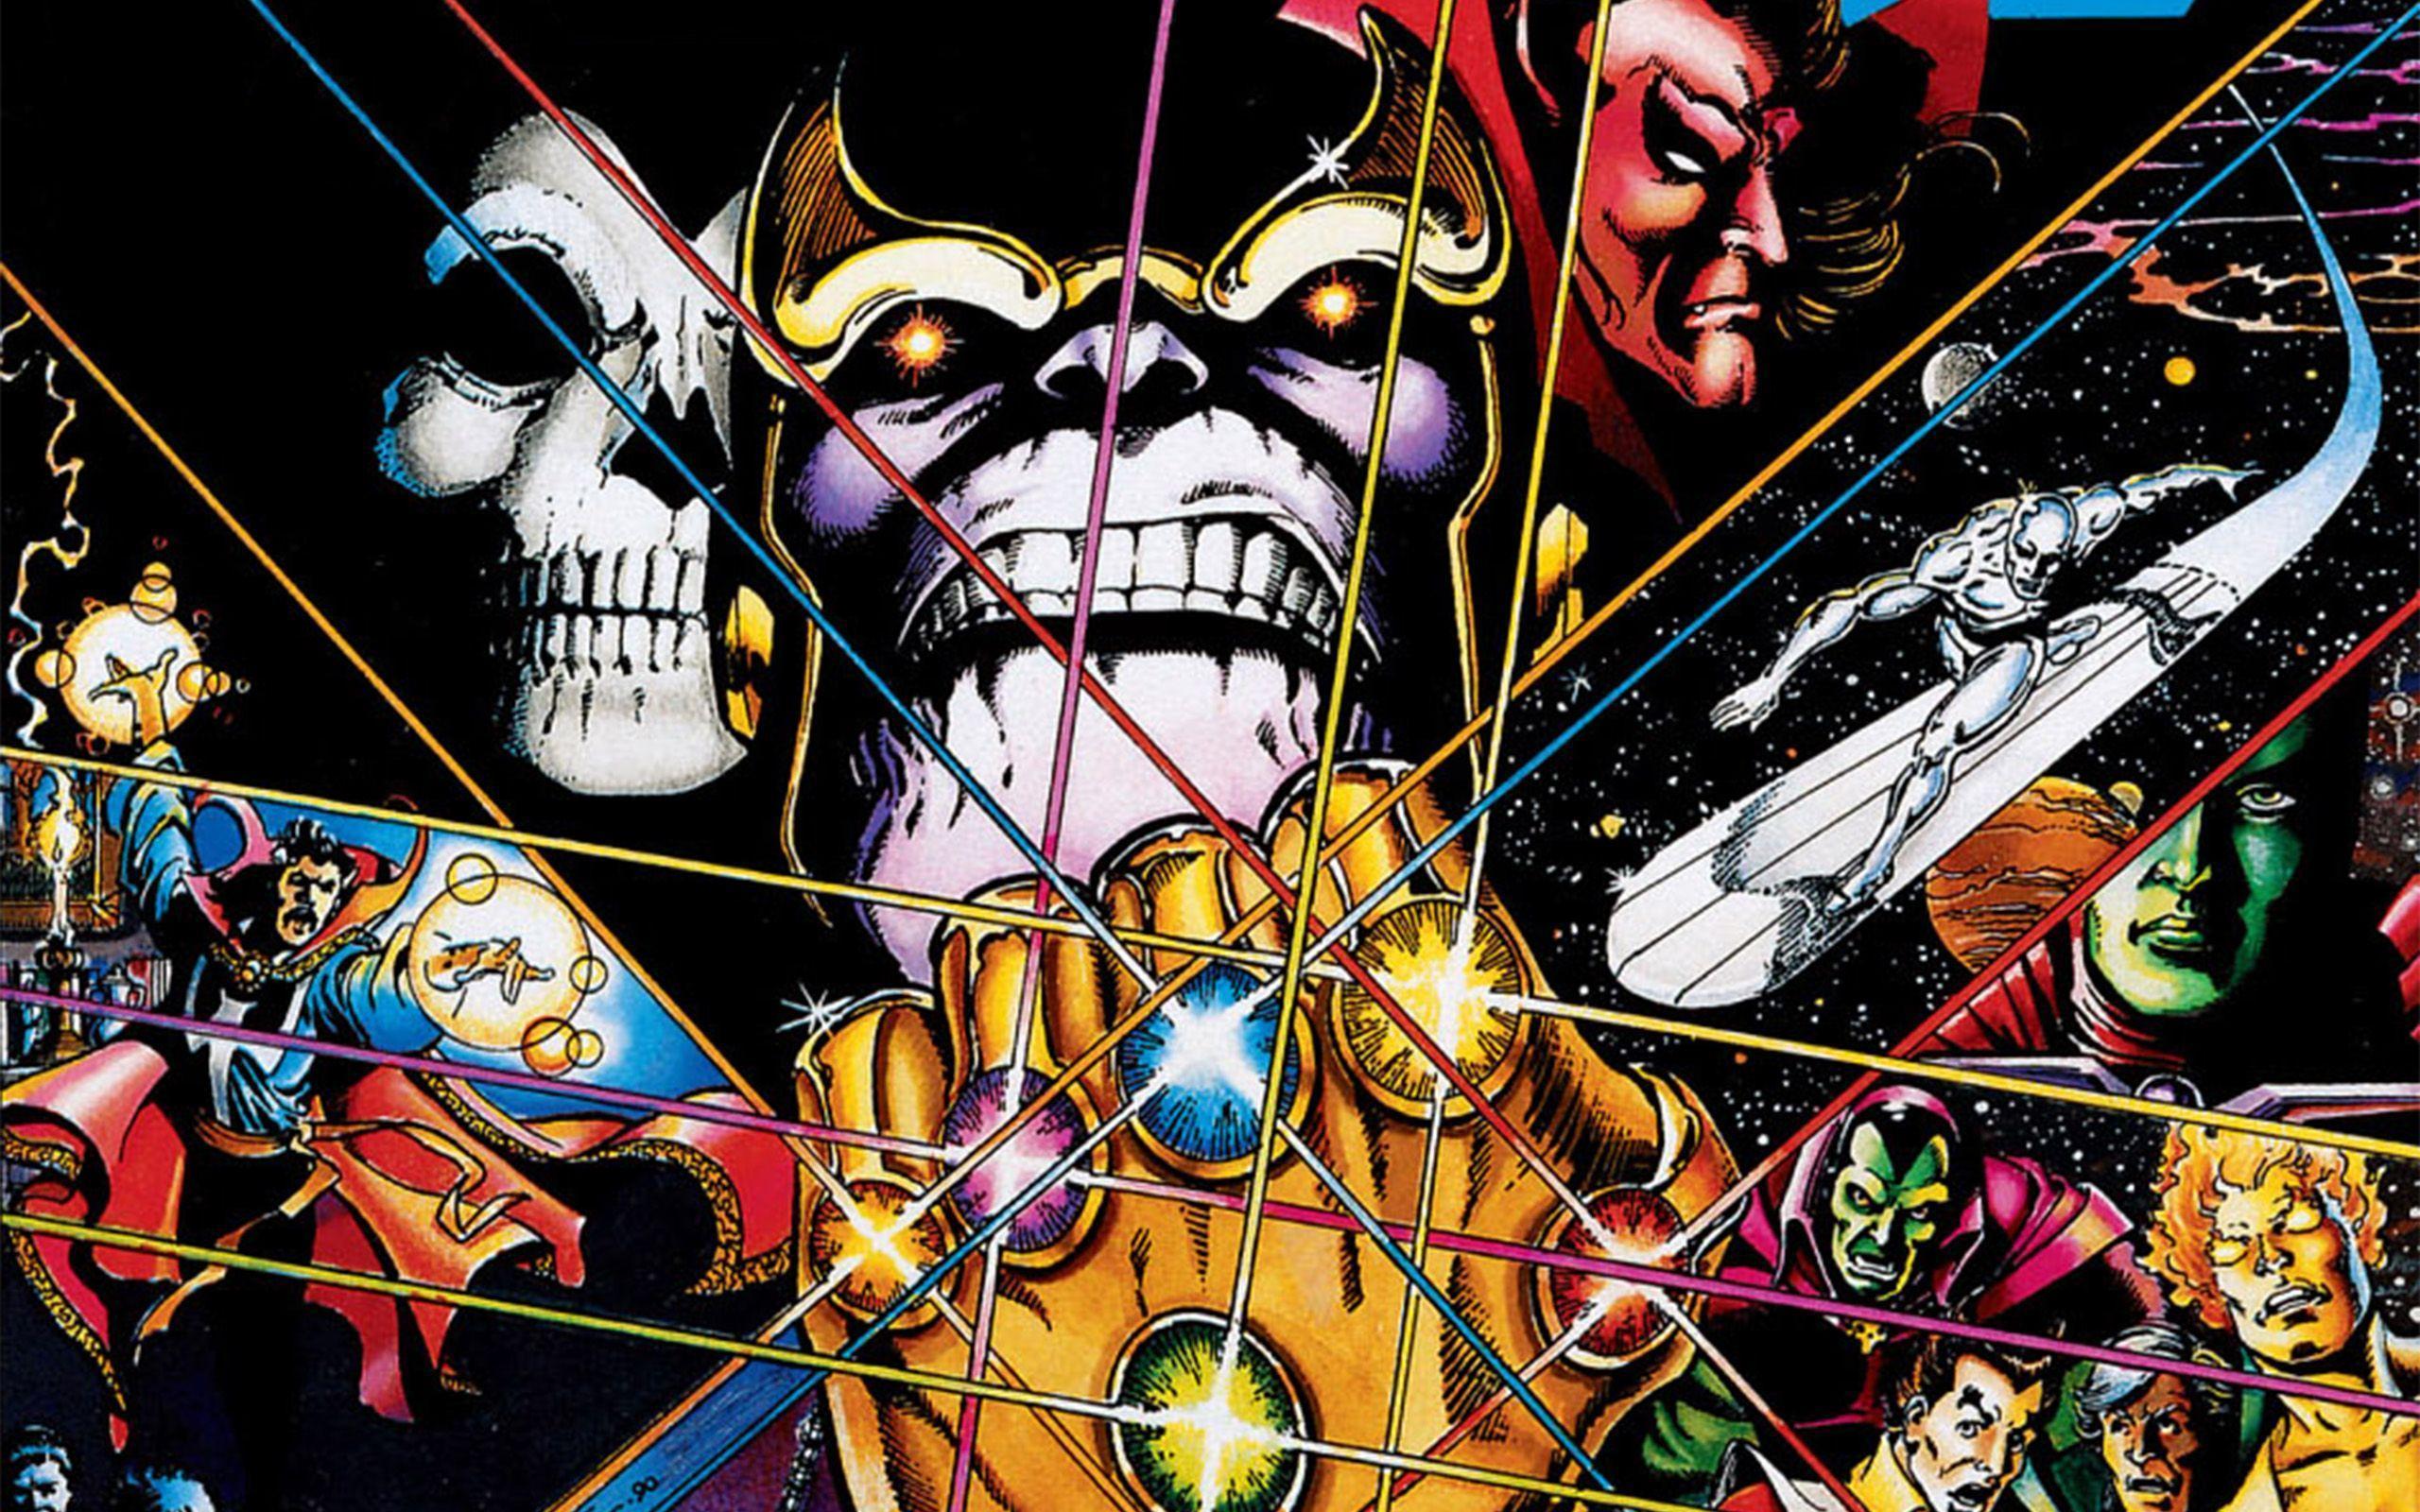 Avengers: Infinity War HD wallpaper free download